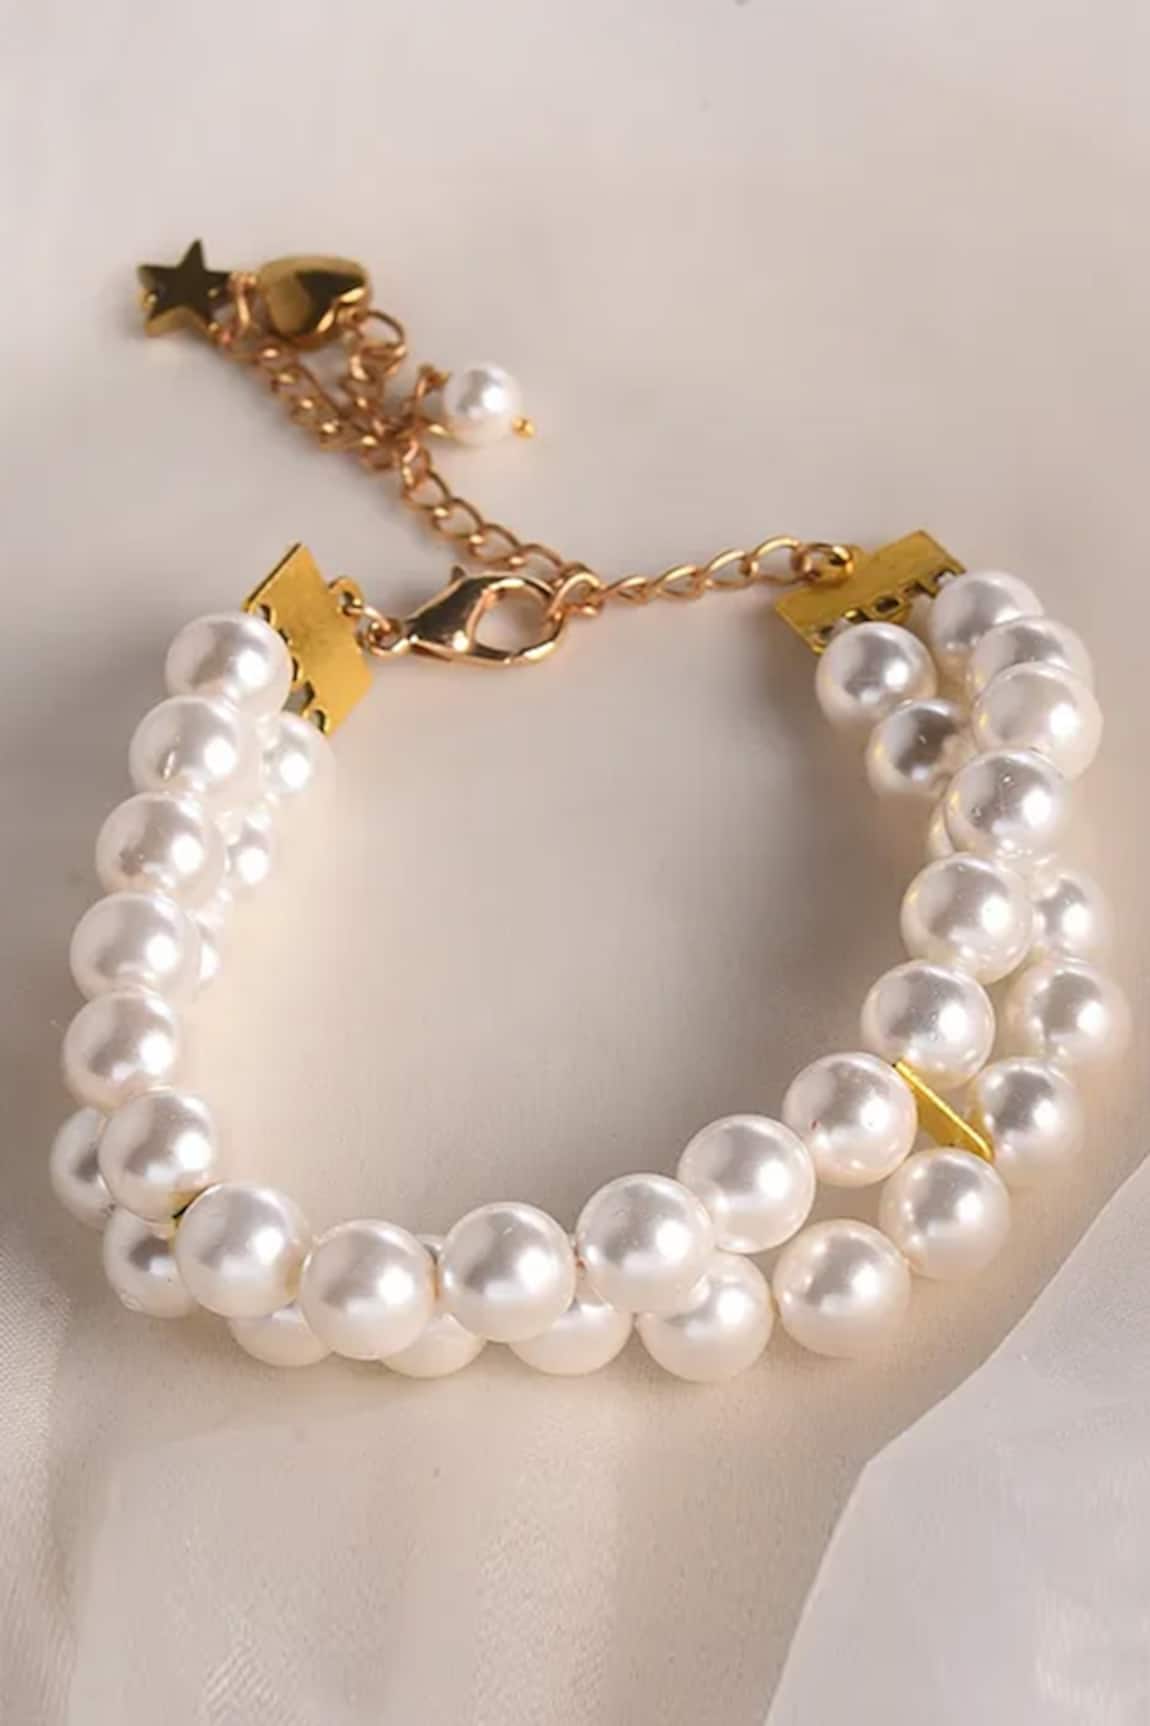 Pearl Bracelet DesignHow to Make a Green Pearl Bead Bracelet   Pandahallcom